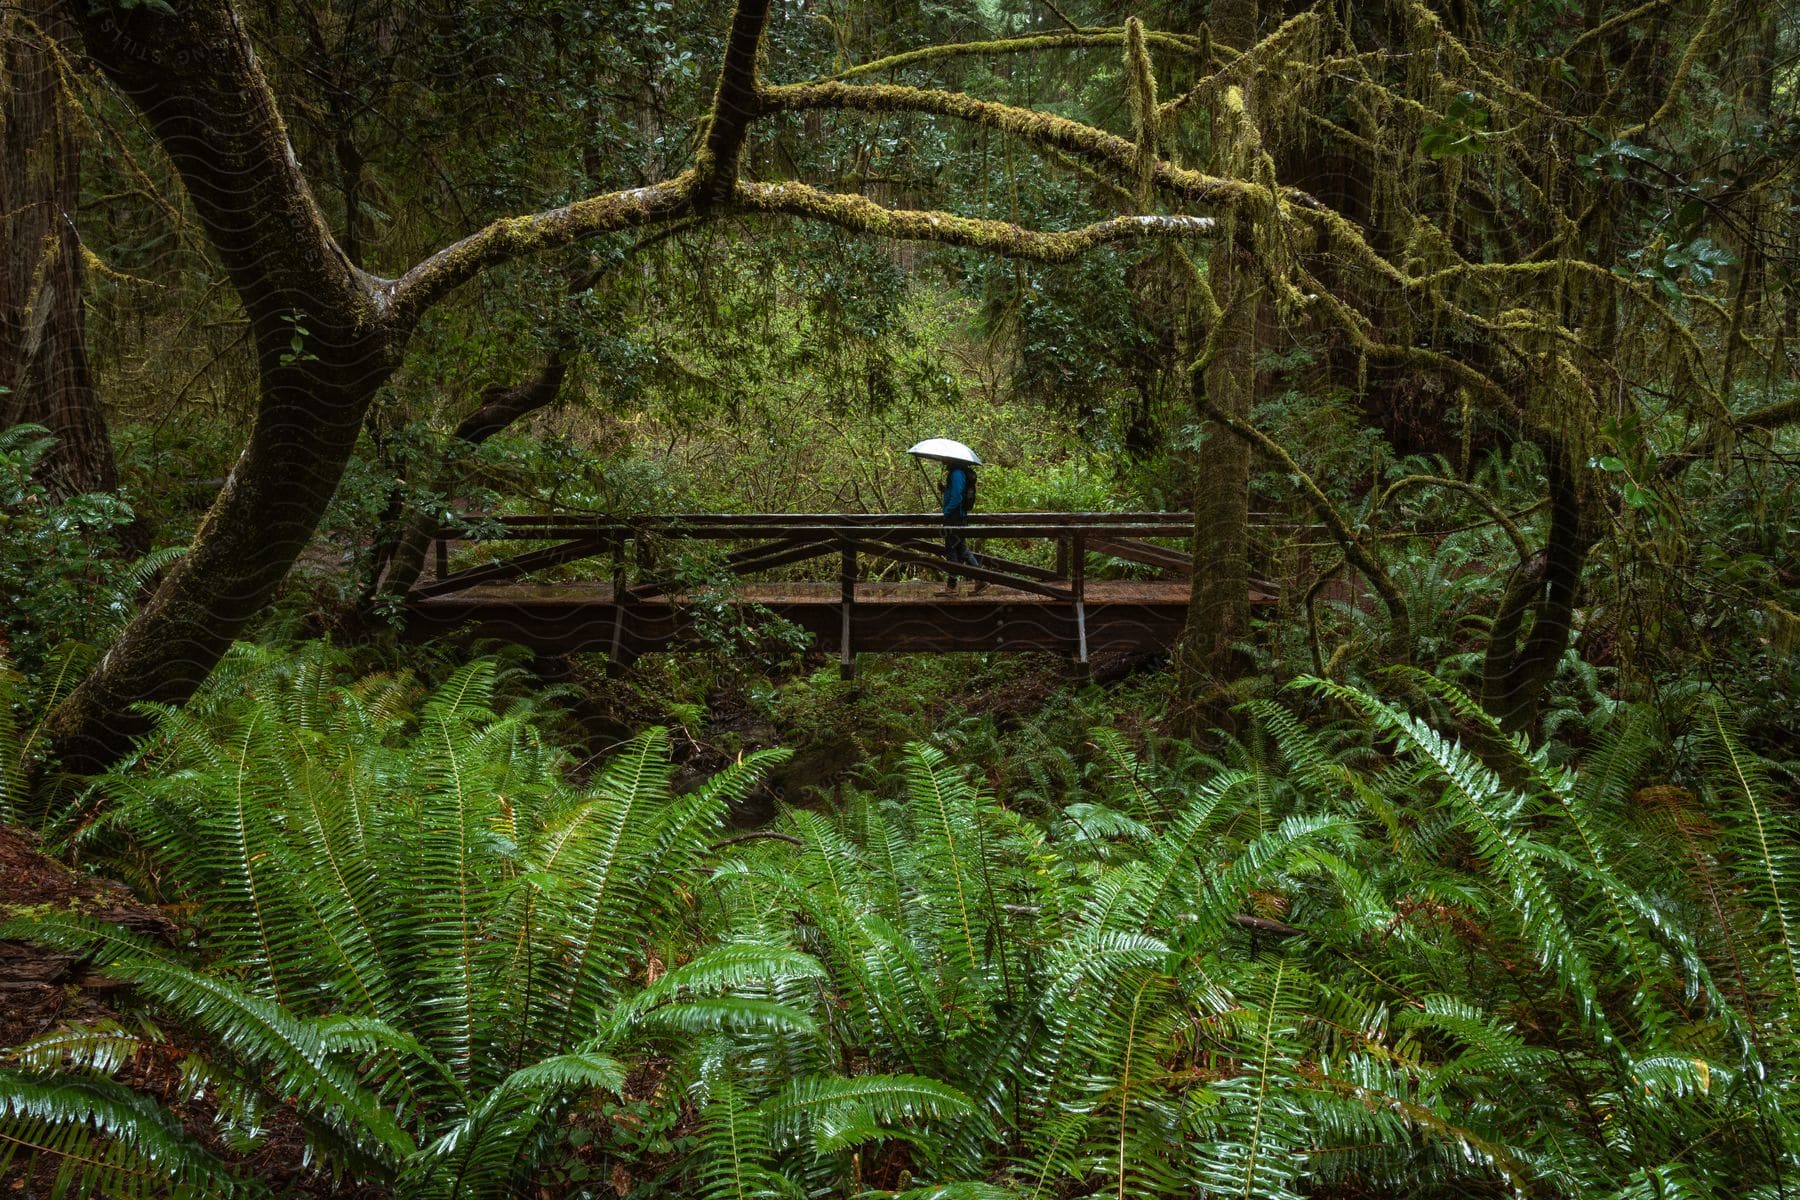 Stock photo of a person holding an umbrella walks across a footbridge in a rainforest